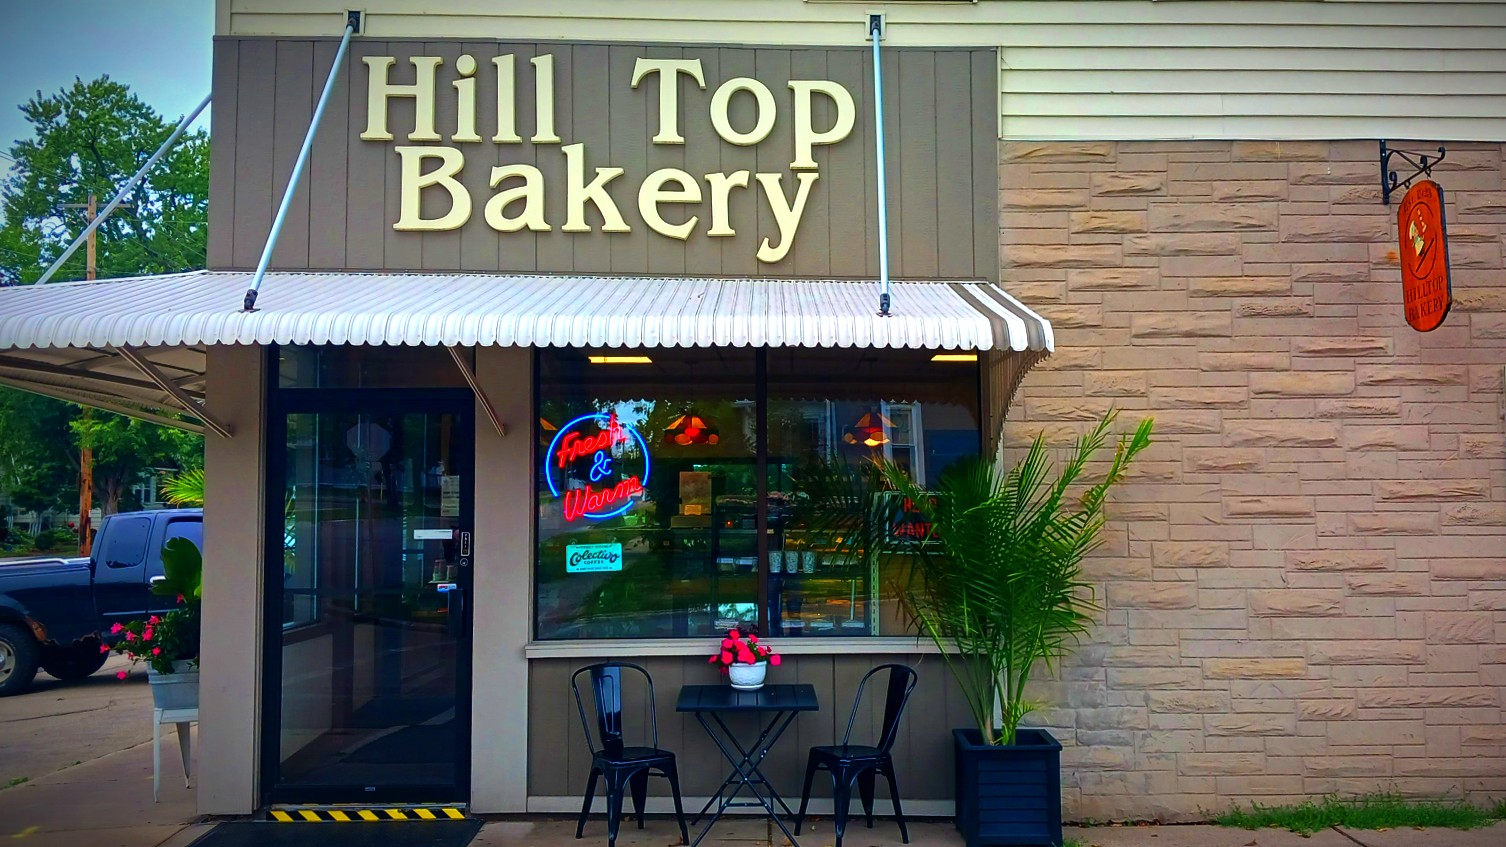 Hill Top Bakery in Kaukauna